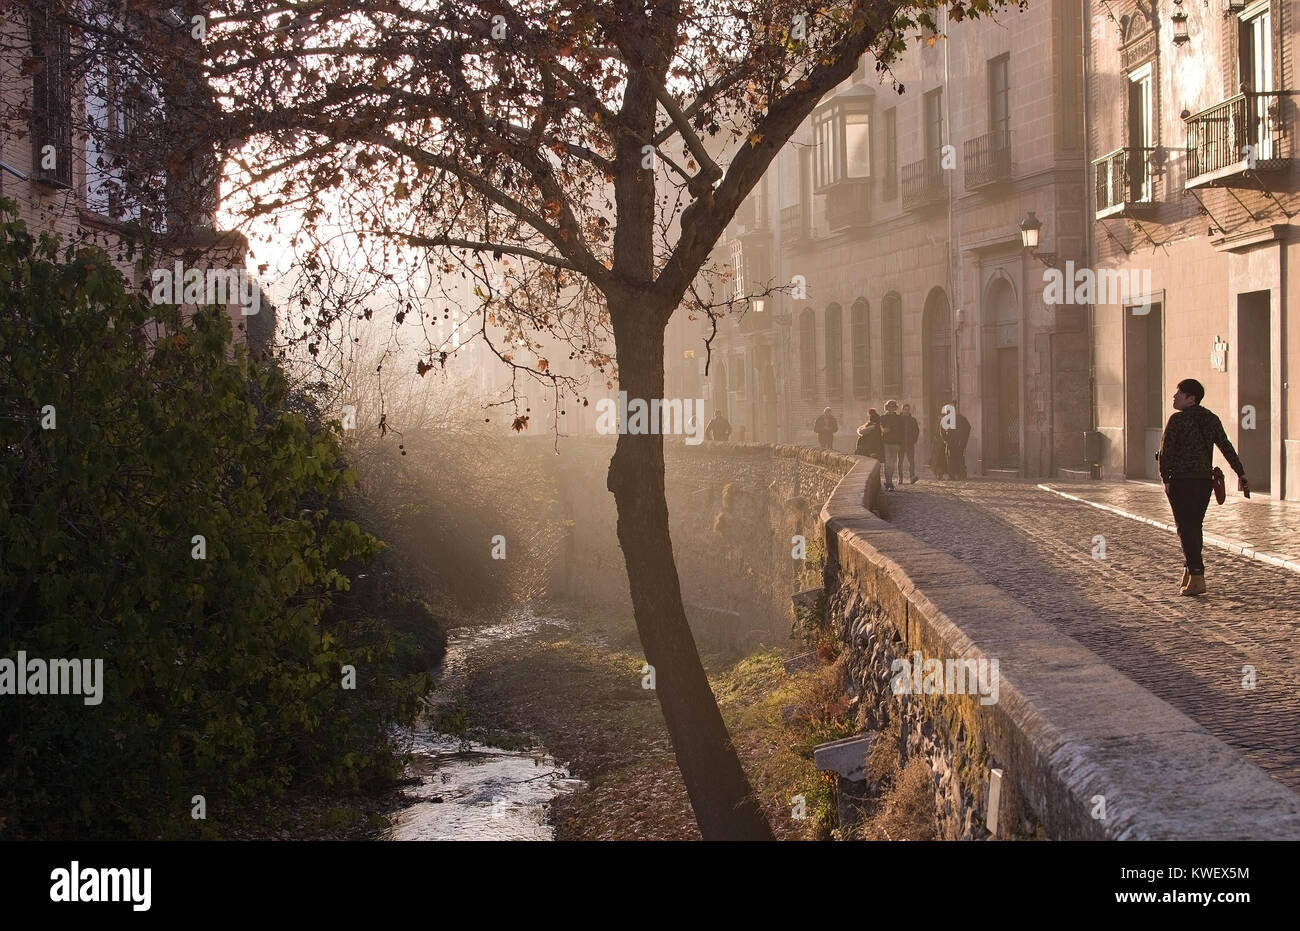 GRANADA, ANDALUCIA, SPAIN - DECEMBER 20, 2017: Woman walks by Carrera del Darro river in afternoon sunhaze on December 20, 2017 in Granada, Andalucia, Stock Photo